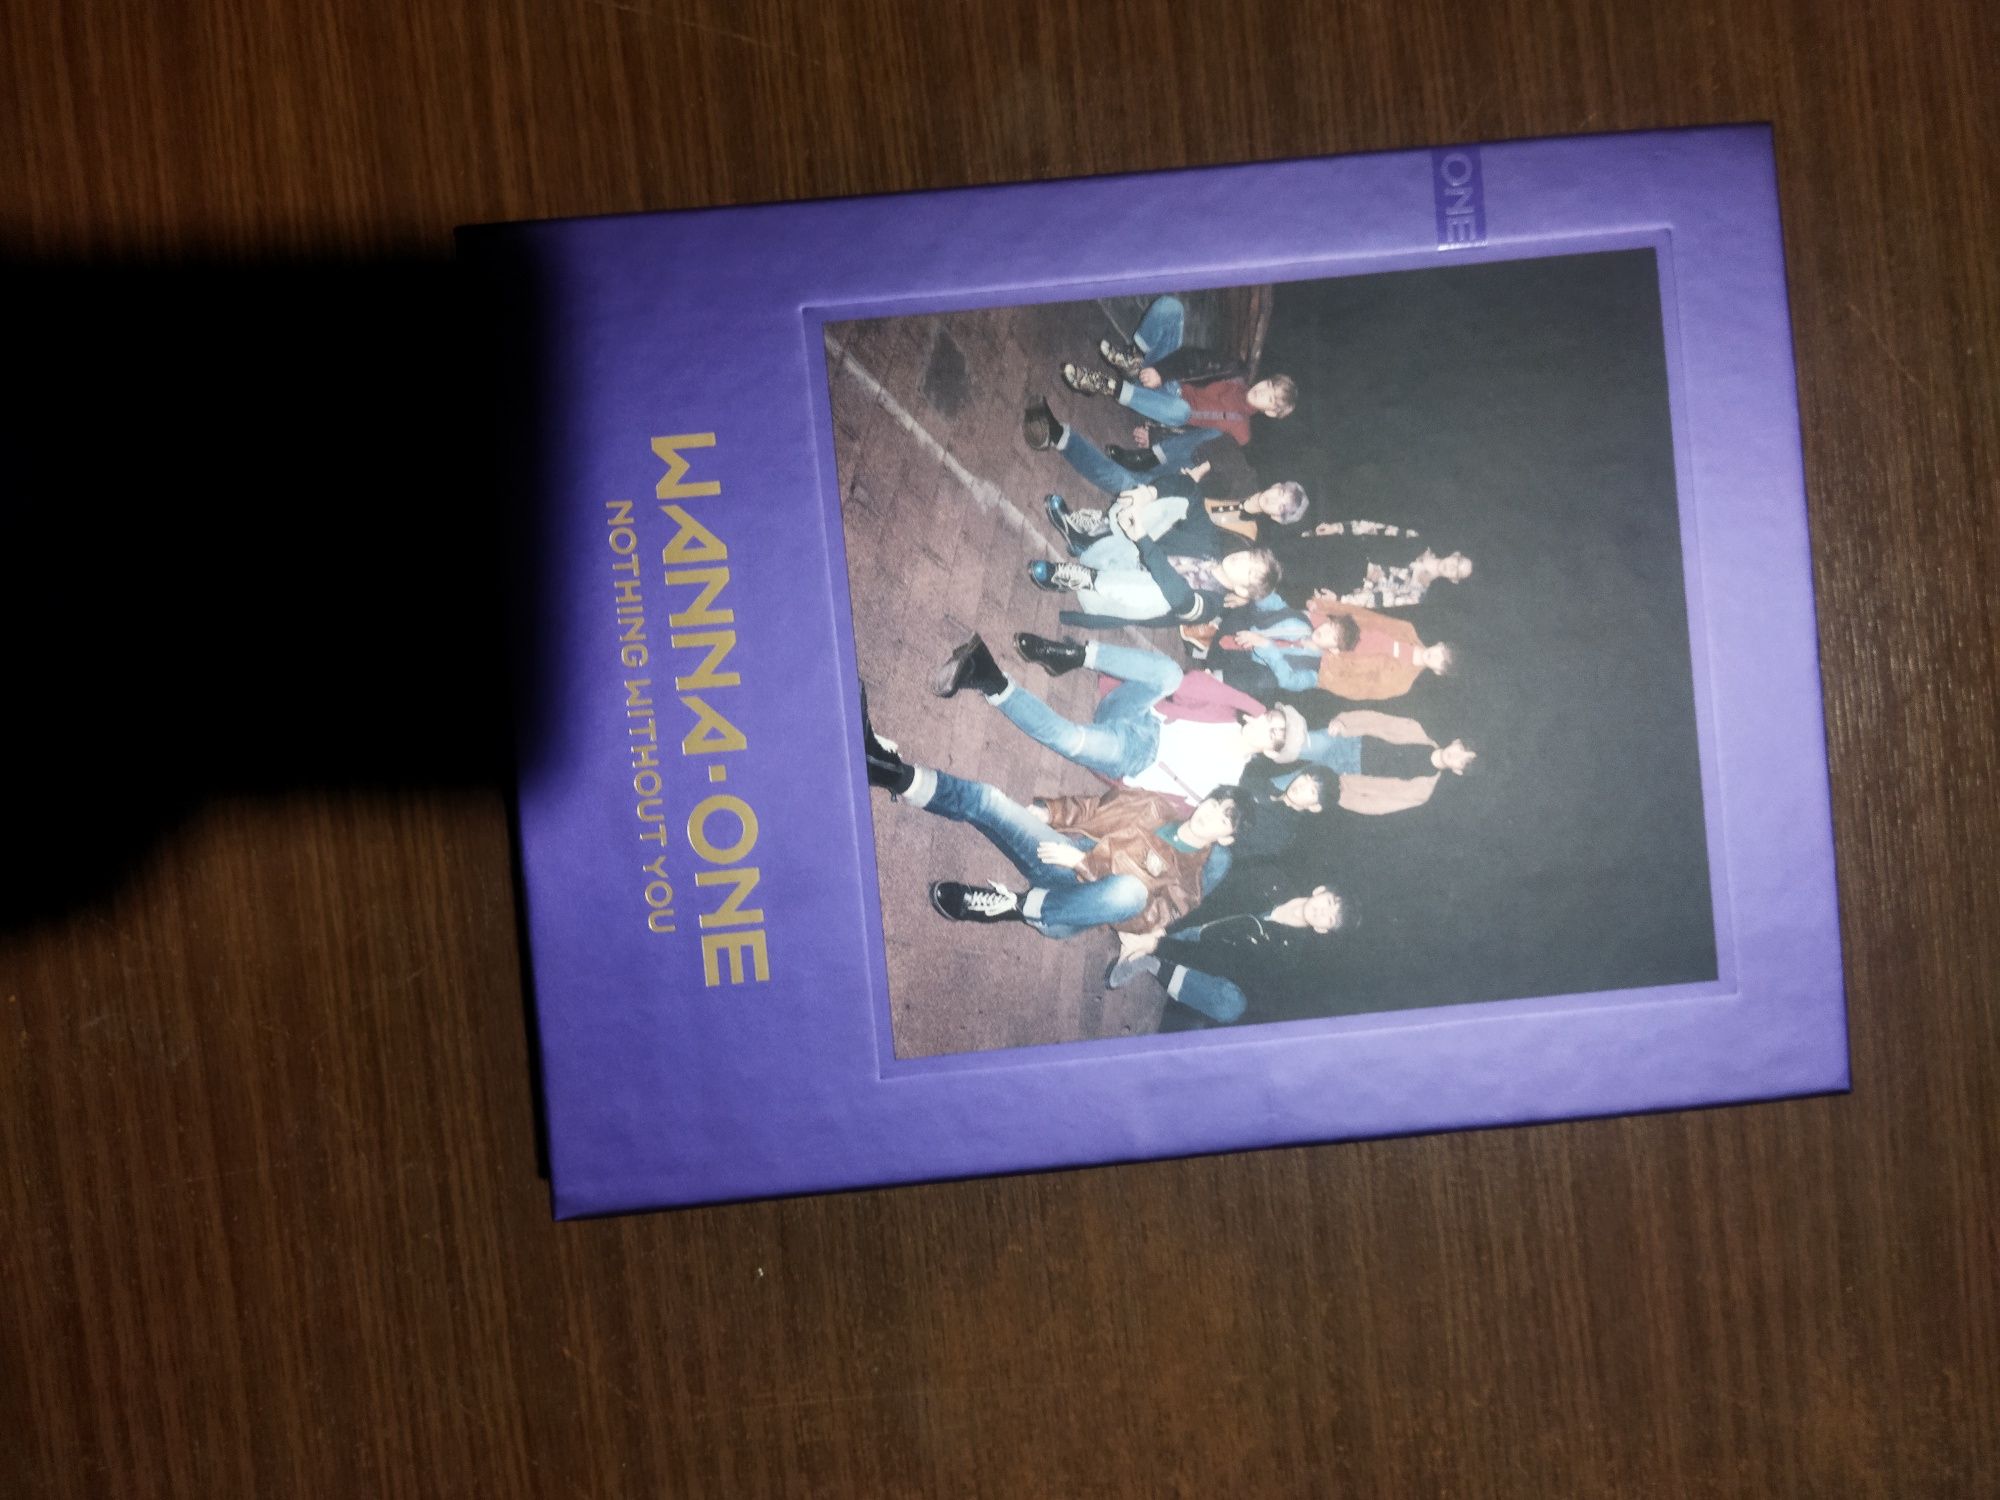 Wanna One - Repackage 1 mini albumu ("To Be One") wersja WANNA